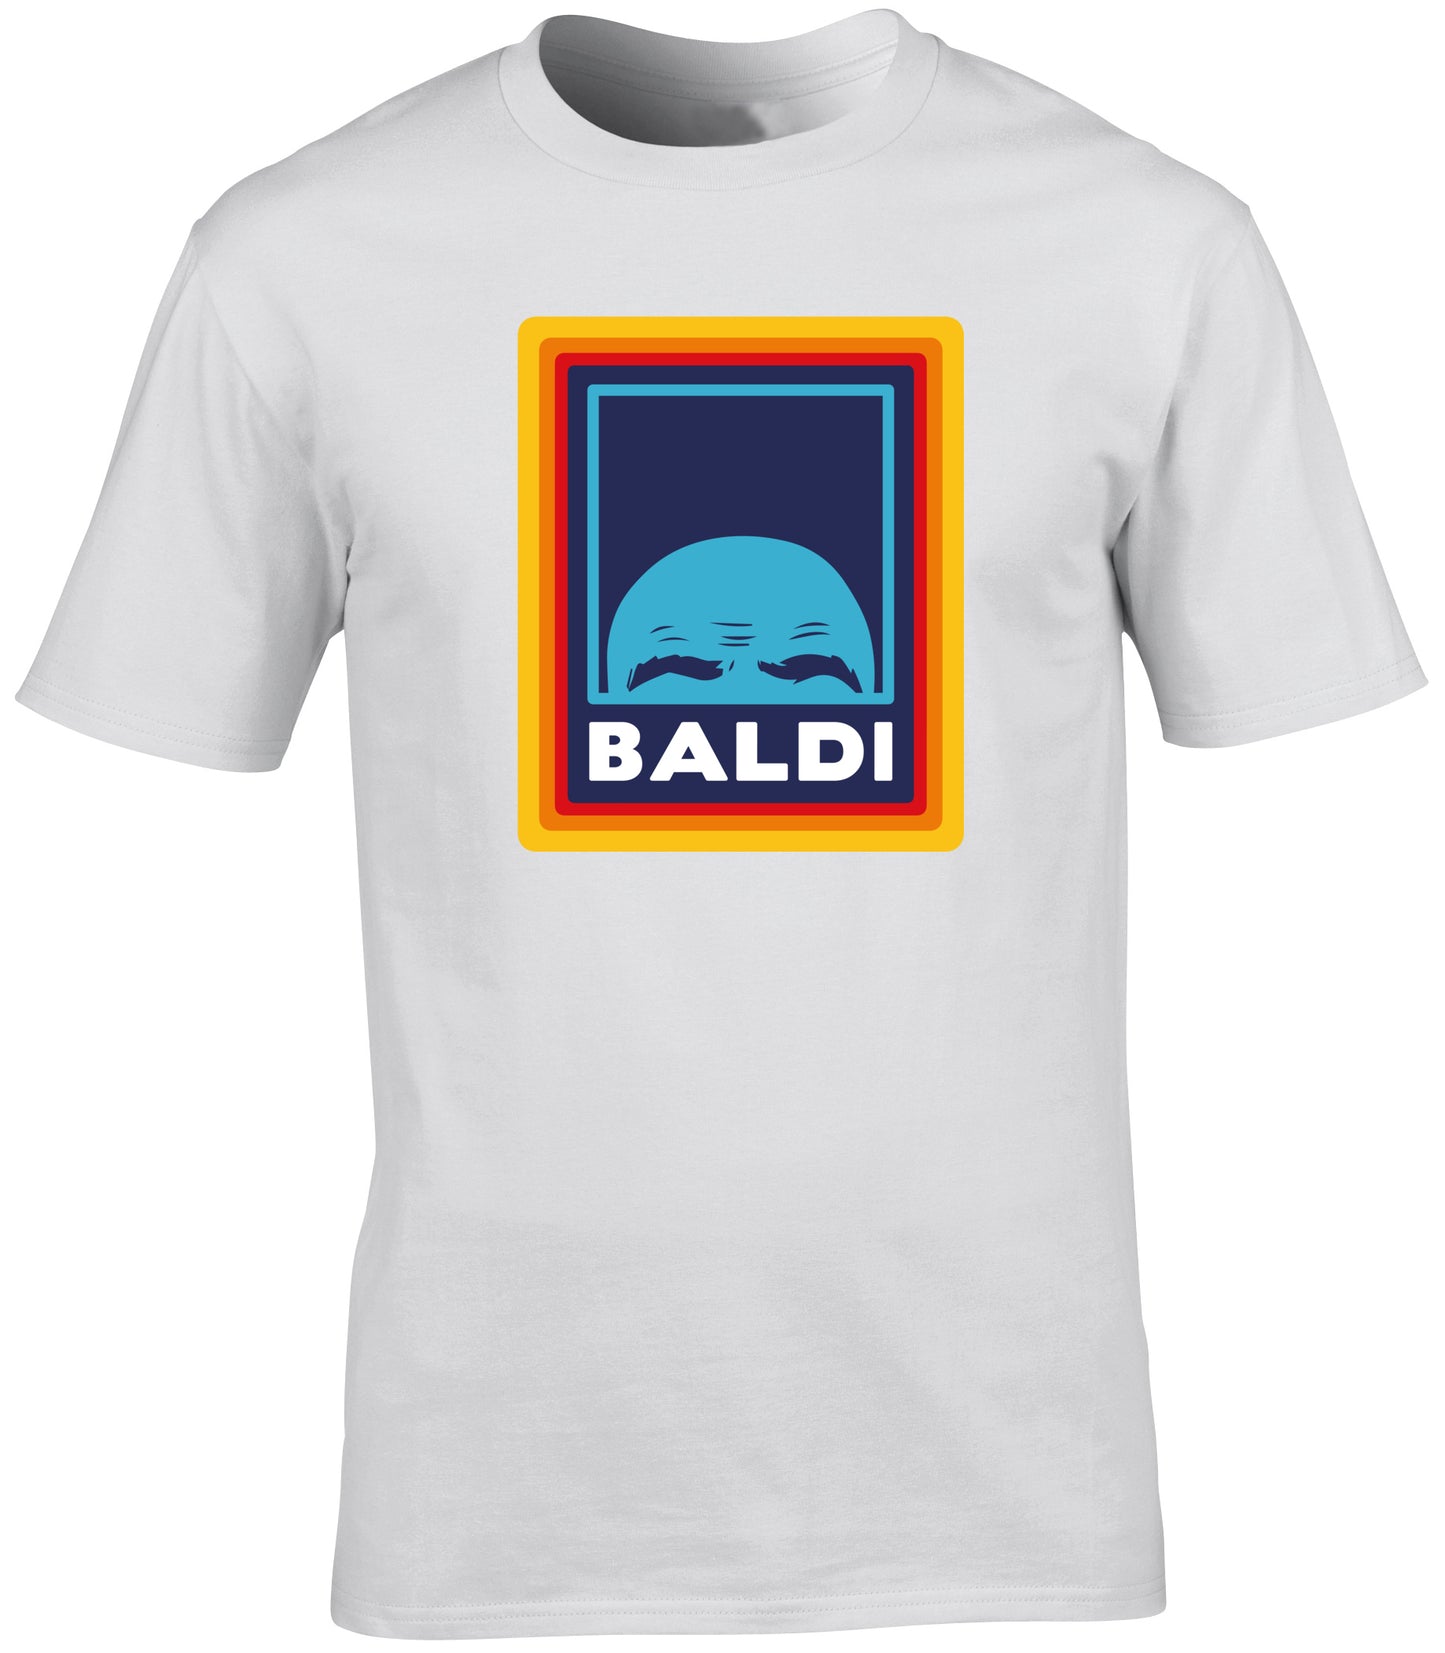 Baldi unisex t-shirt